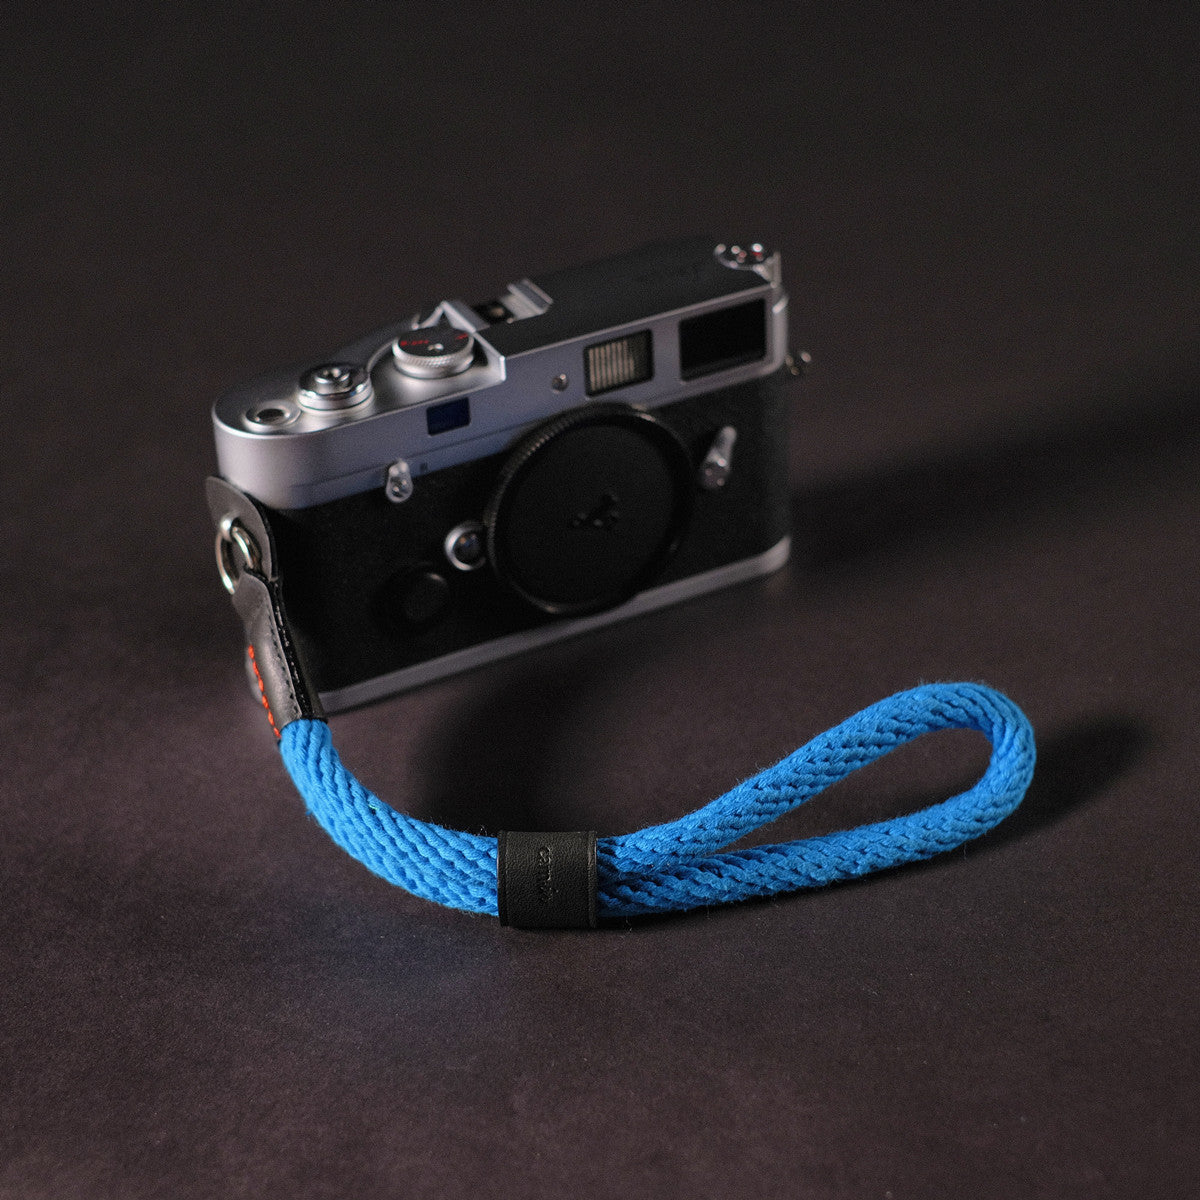 Fashion DSLR Cotton Camera Wrist Strap For Round Hole Camera WS022 - icambag